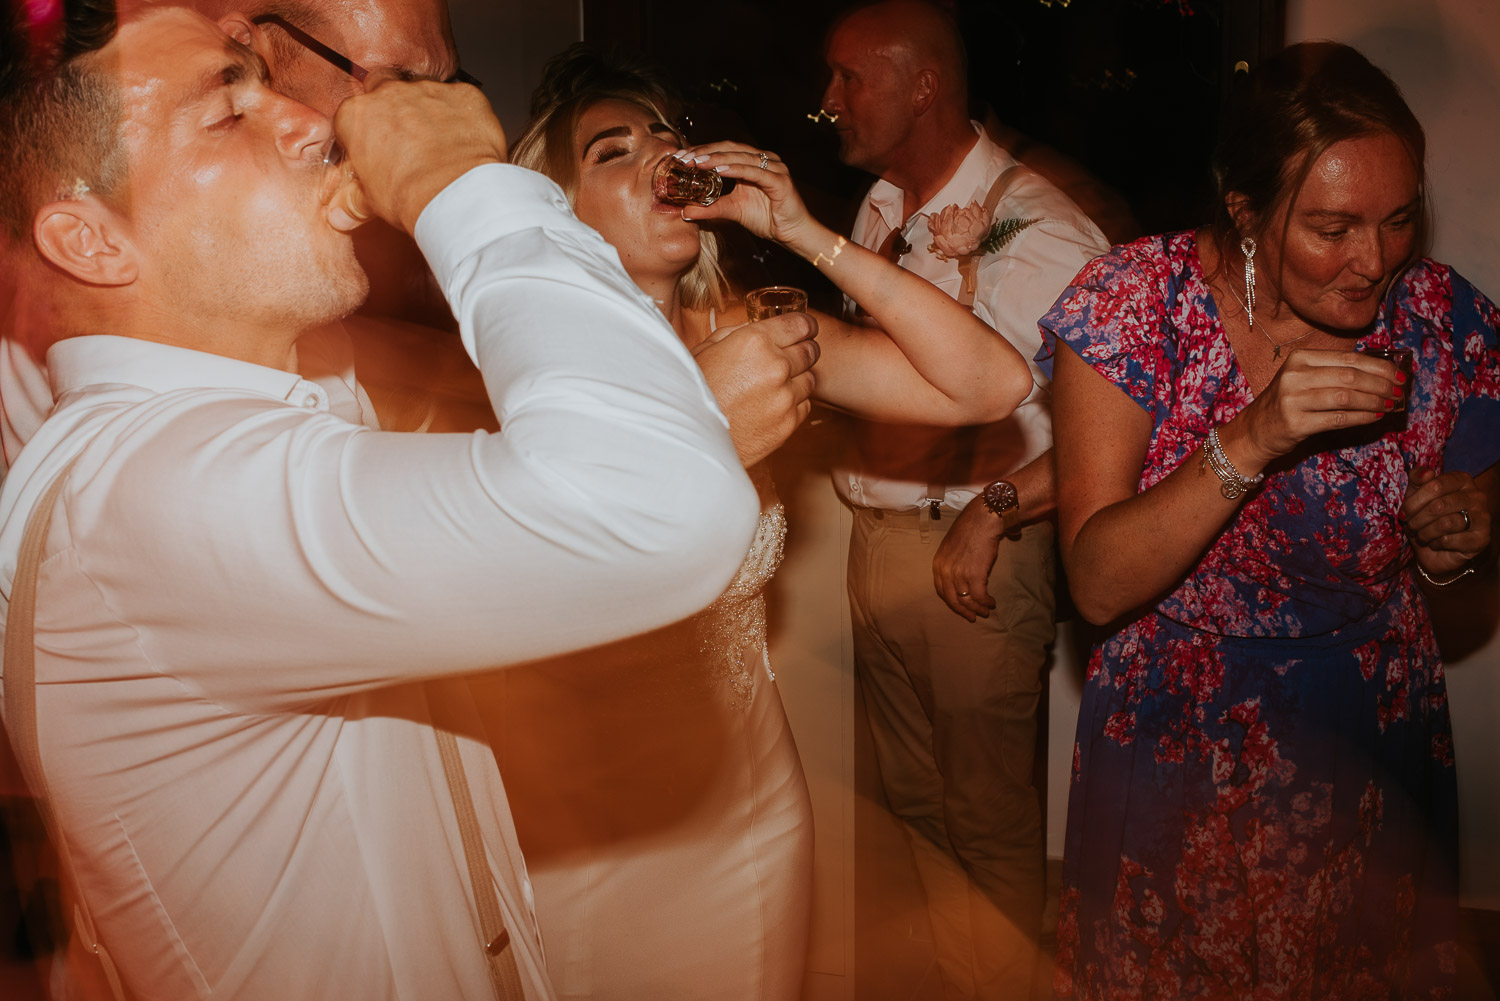 Wedding photographer Santorini: bride and groom drinking shots on the dance floor by Ben and Vesna.